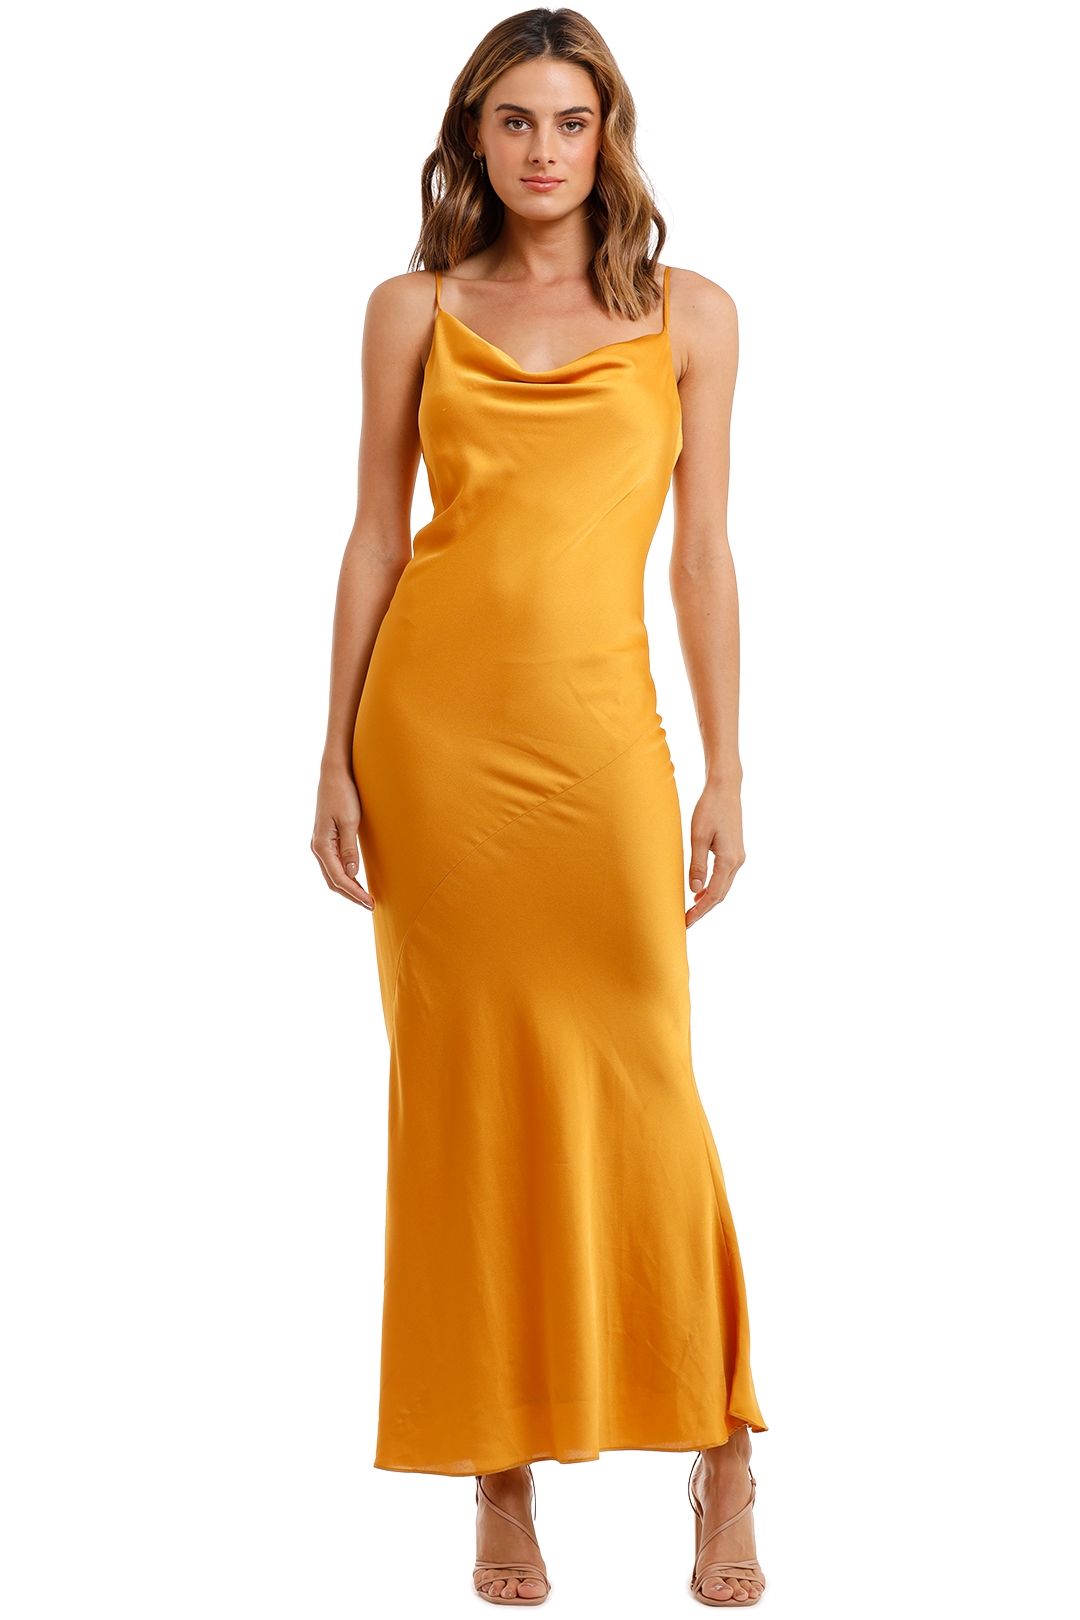 Shona Joy Bias Cowl Maxi Dress Saffron orange yellow